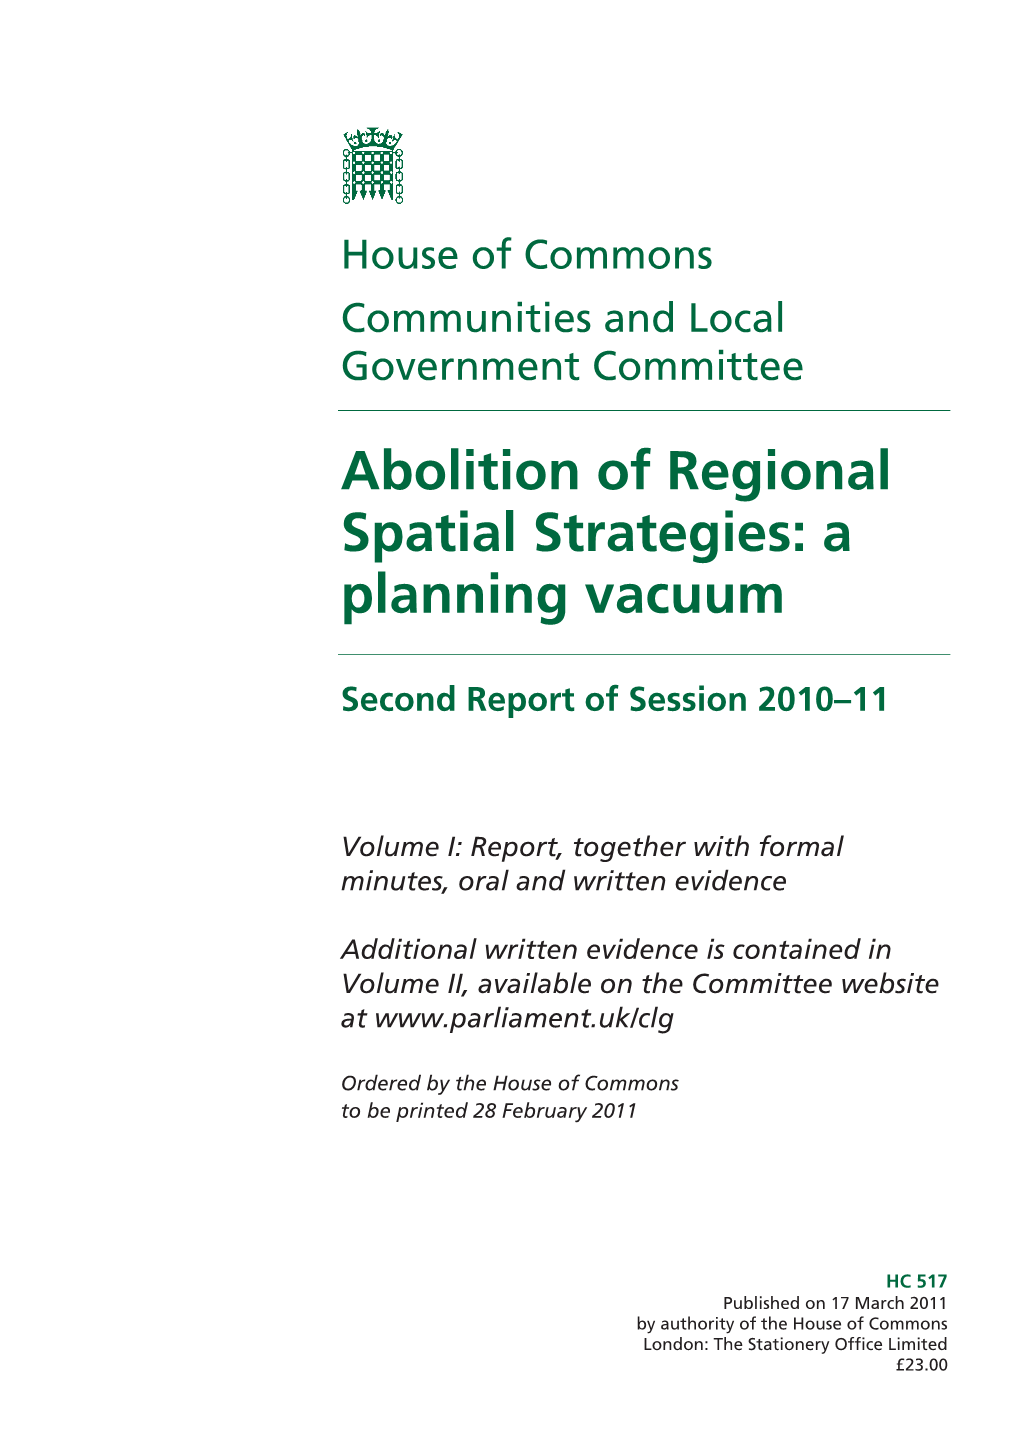 Abolition of Regional Spatial Strategies: a Planning Vacuum